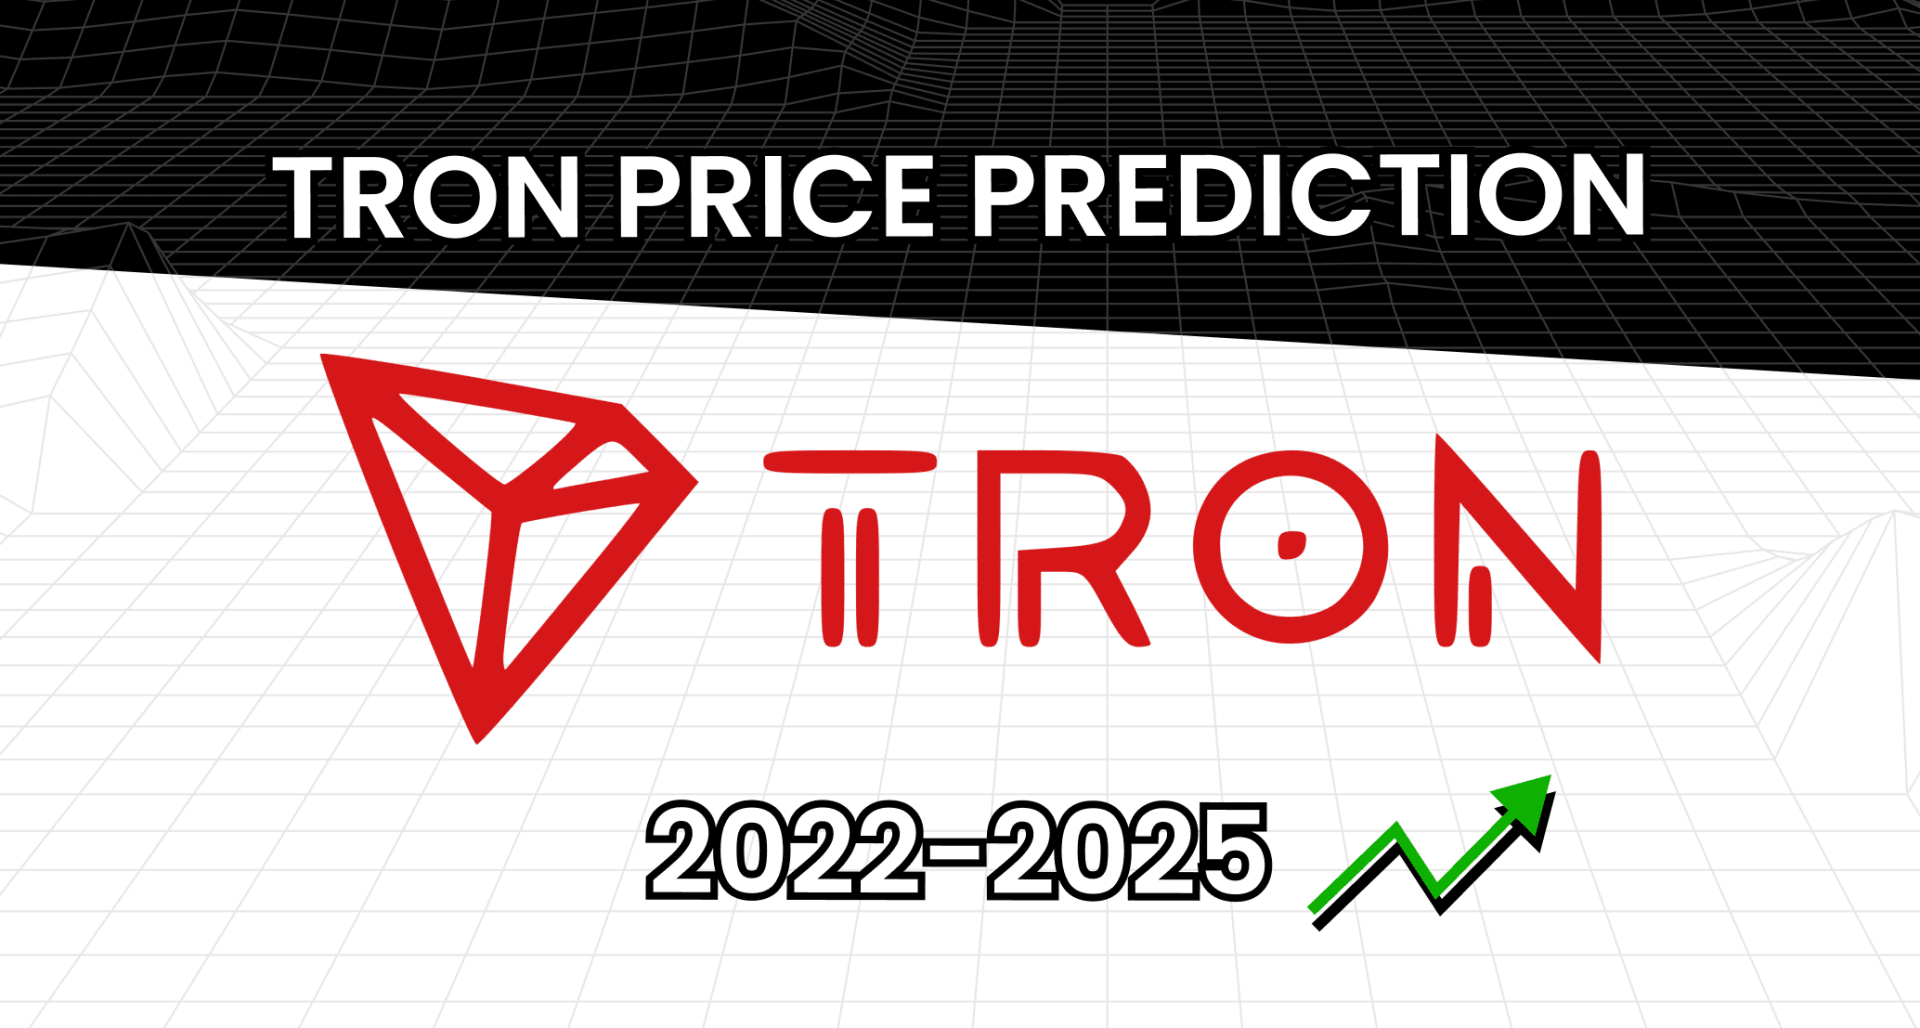 Tron price prediction